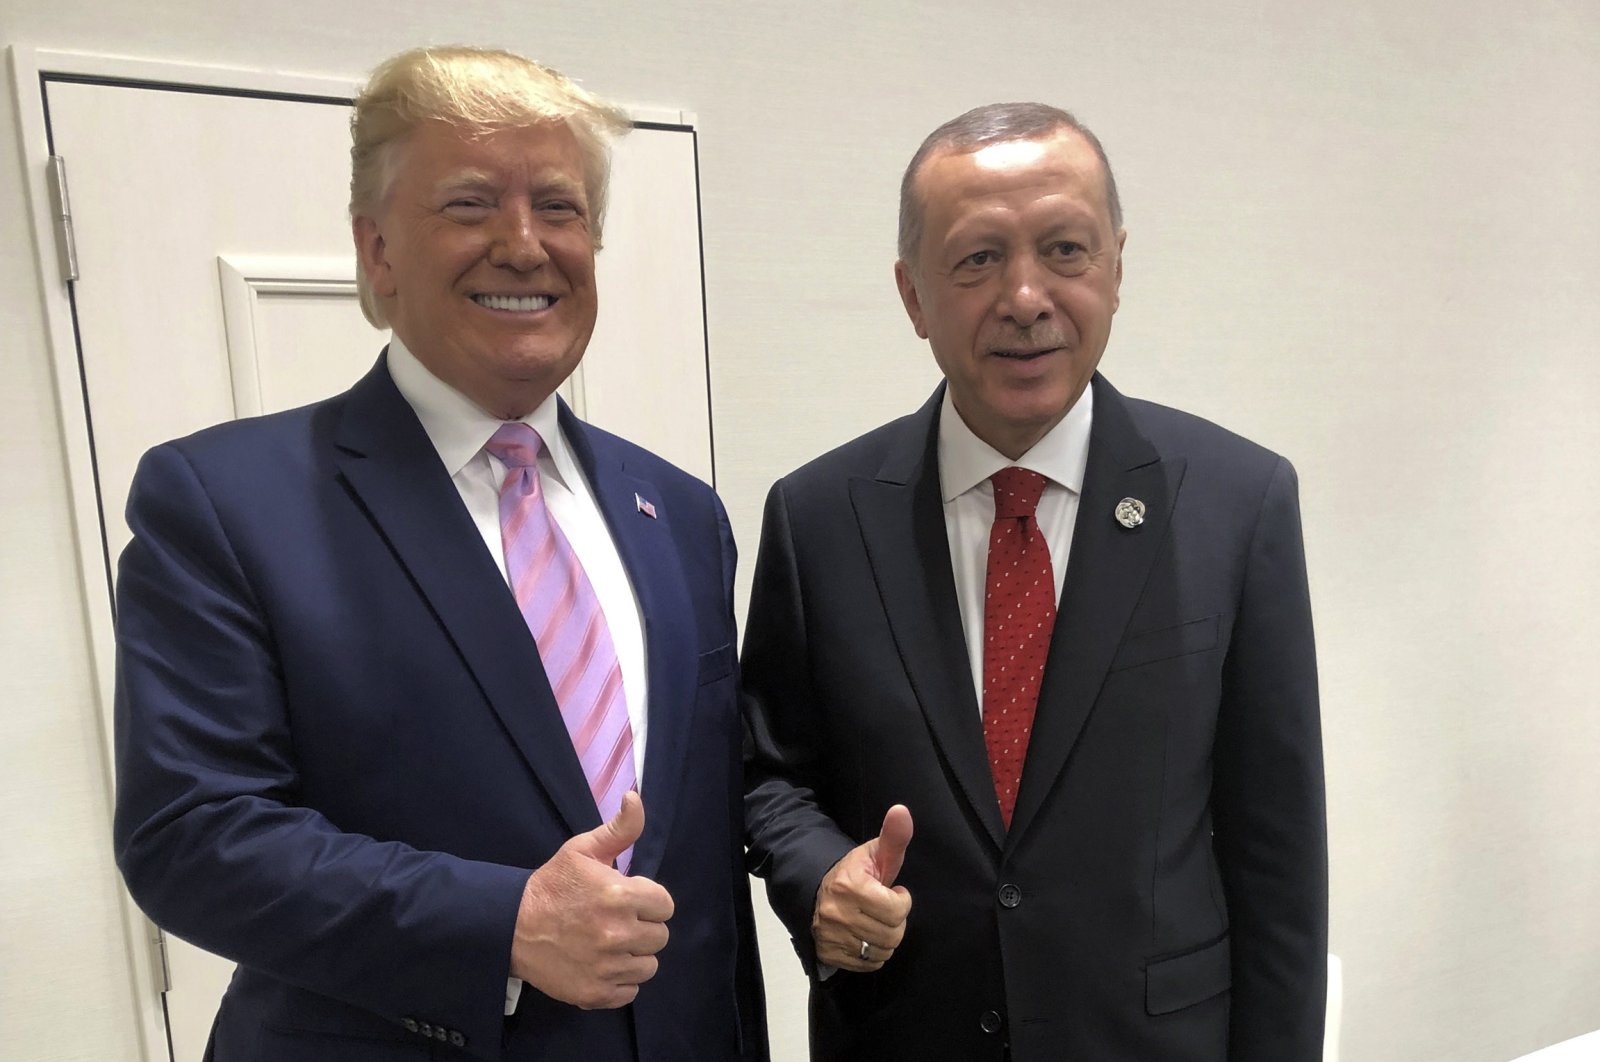 President Recep Tayyip Erdoğan, and U.S President Donald Trump gesture during the G-20 summit in Osaka, Japan, Friday, June 28, 2019. (AP Photo)